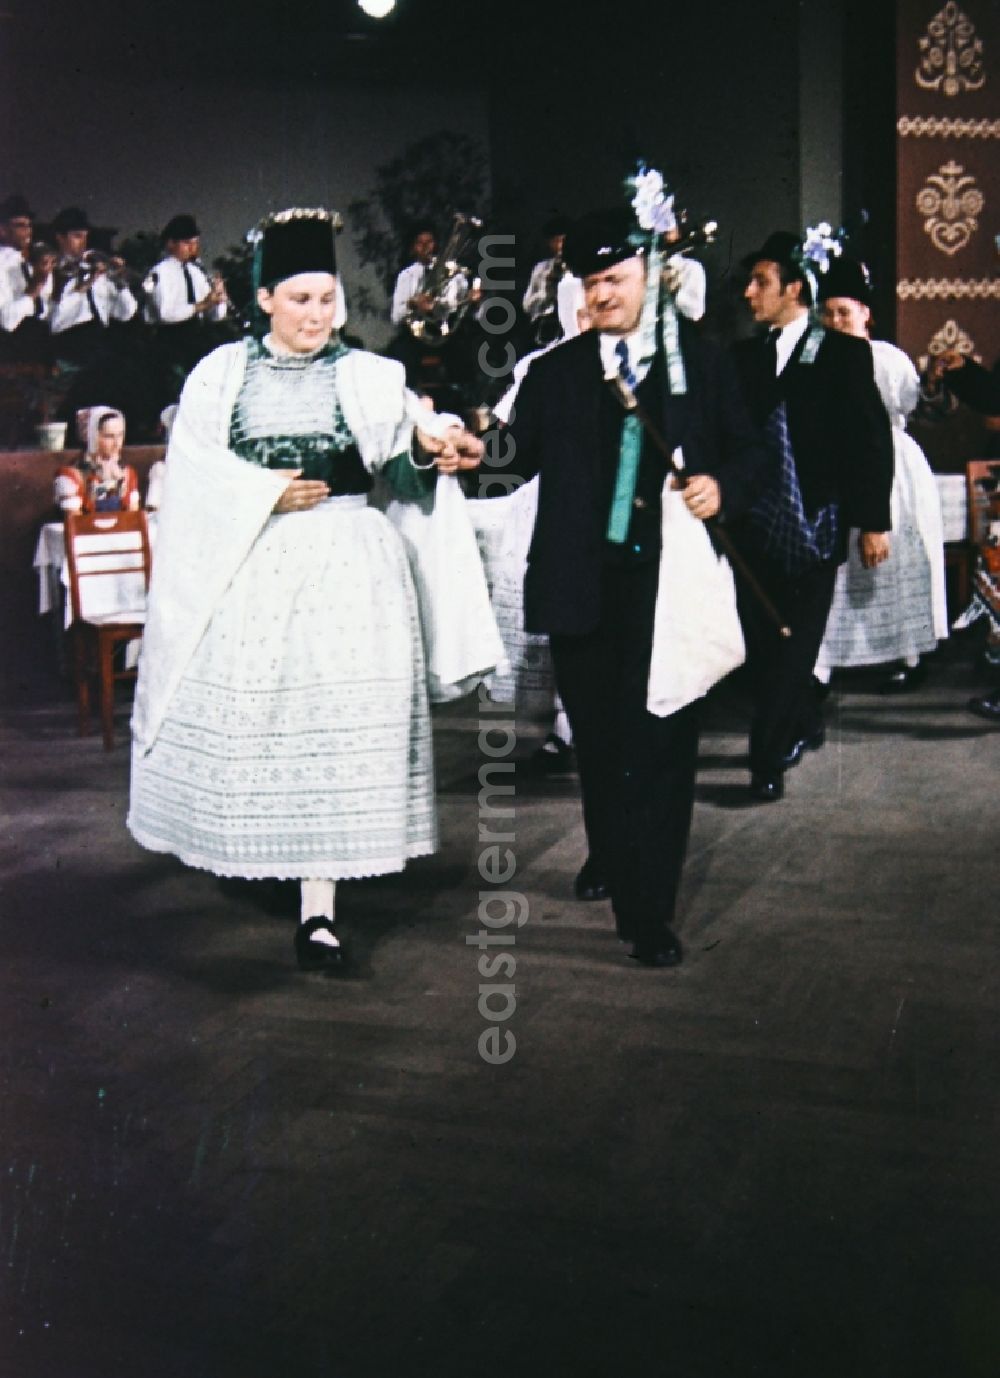 GDR image archive: Milkel - Wedding sorbian inhabitants in Milkel in the state Saxony on the territory of the former GDR, German Democratic Republic